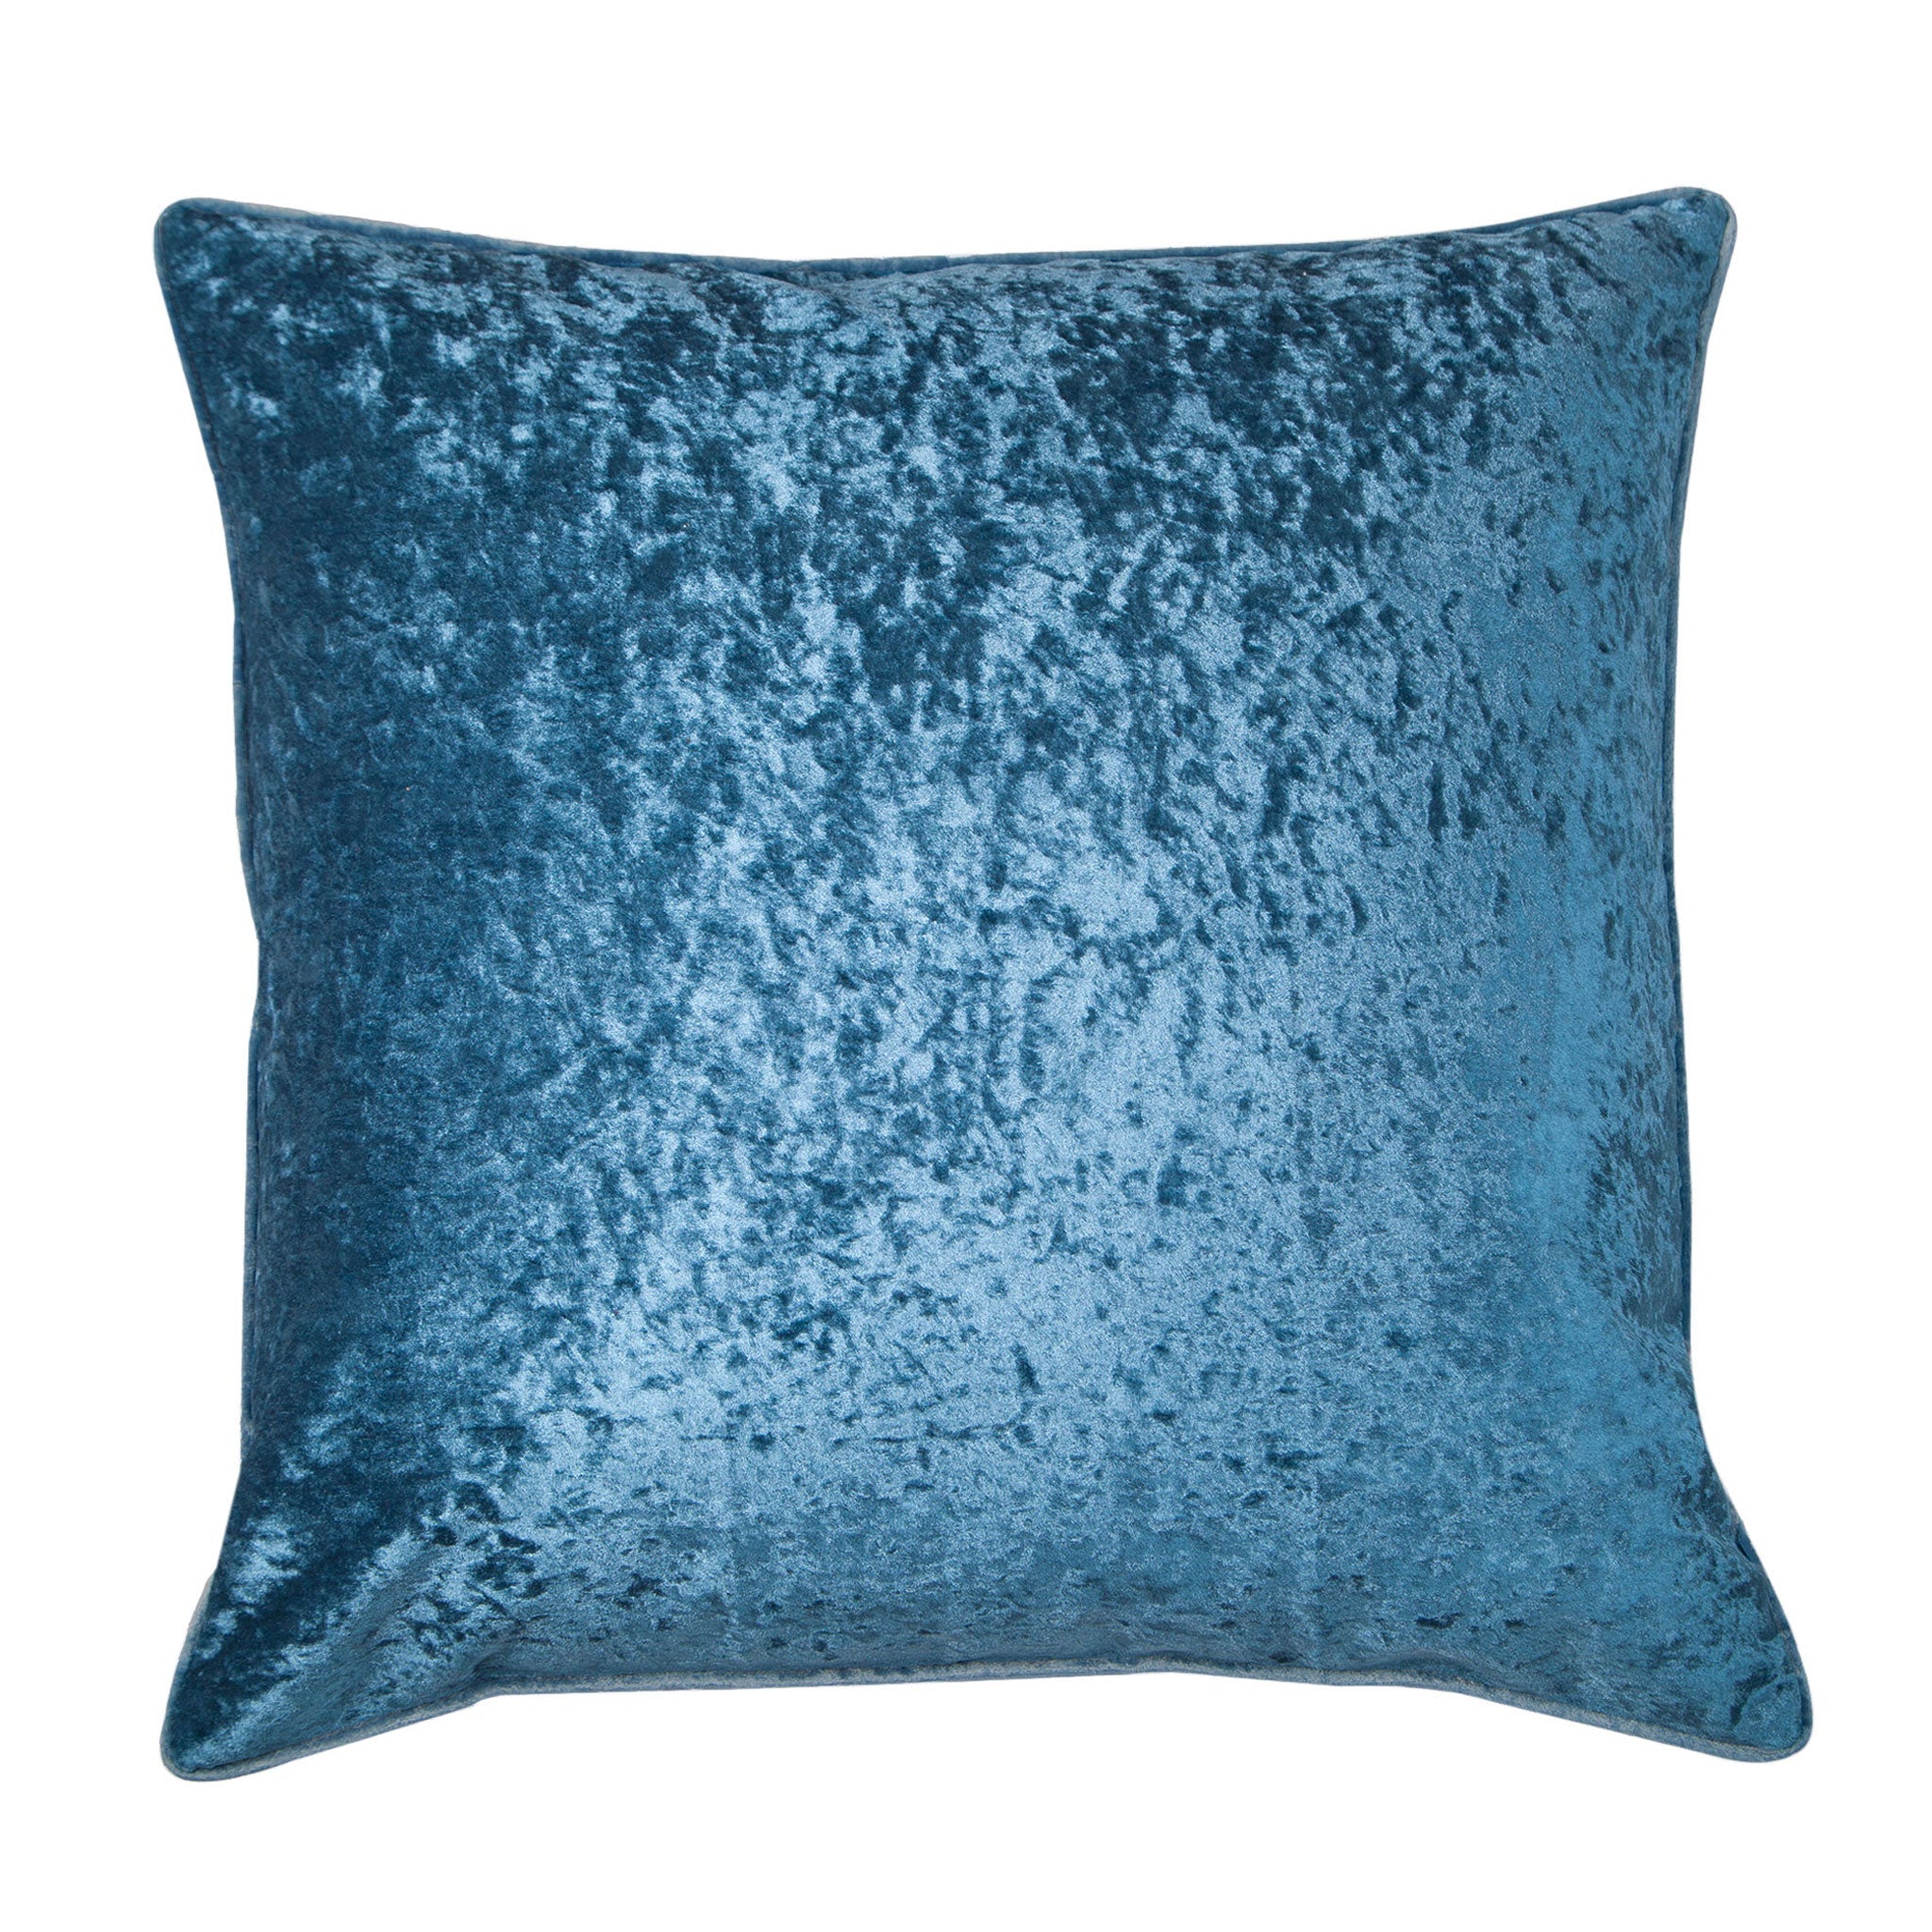 Bivain---C081-NEW-Persian-blue-velvet-cushion-front-and-back_e2acb773-33e8-4f49-89e6-bef24375f597.jpg